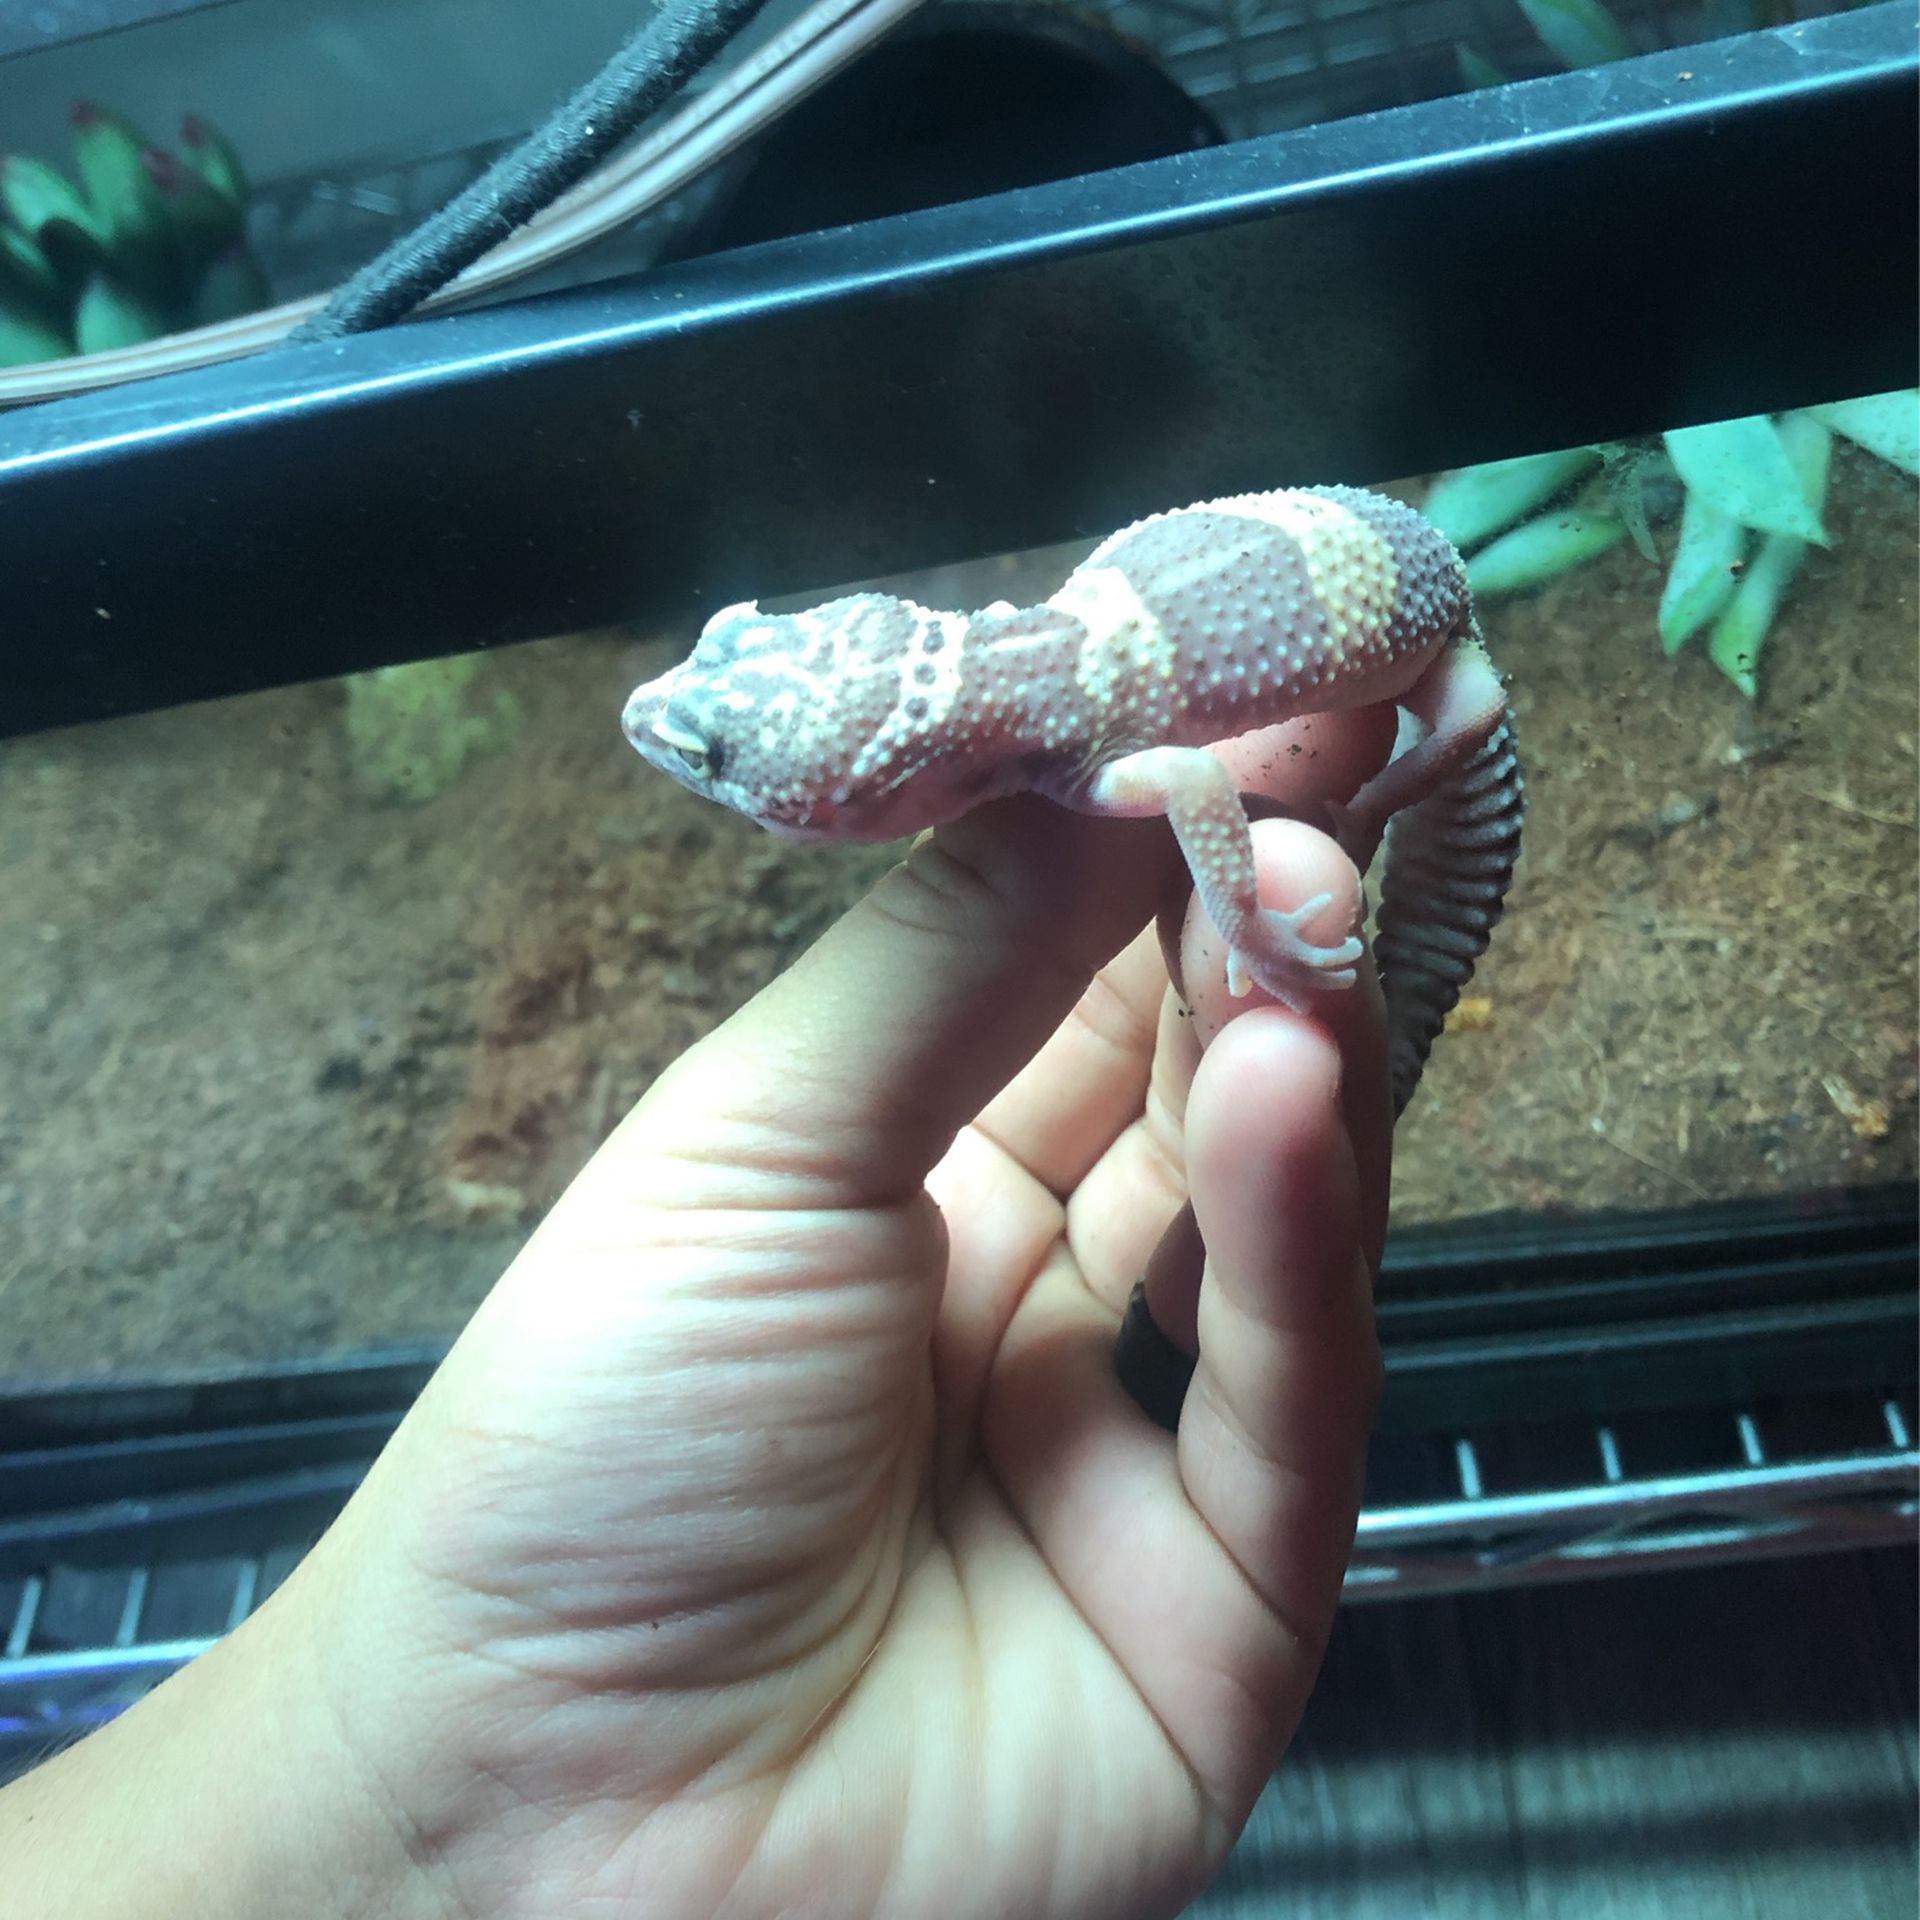 Gecko Enclosure 